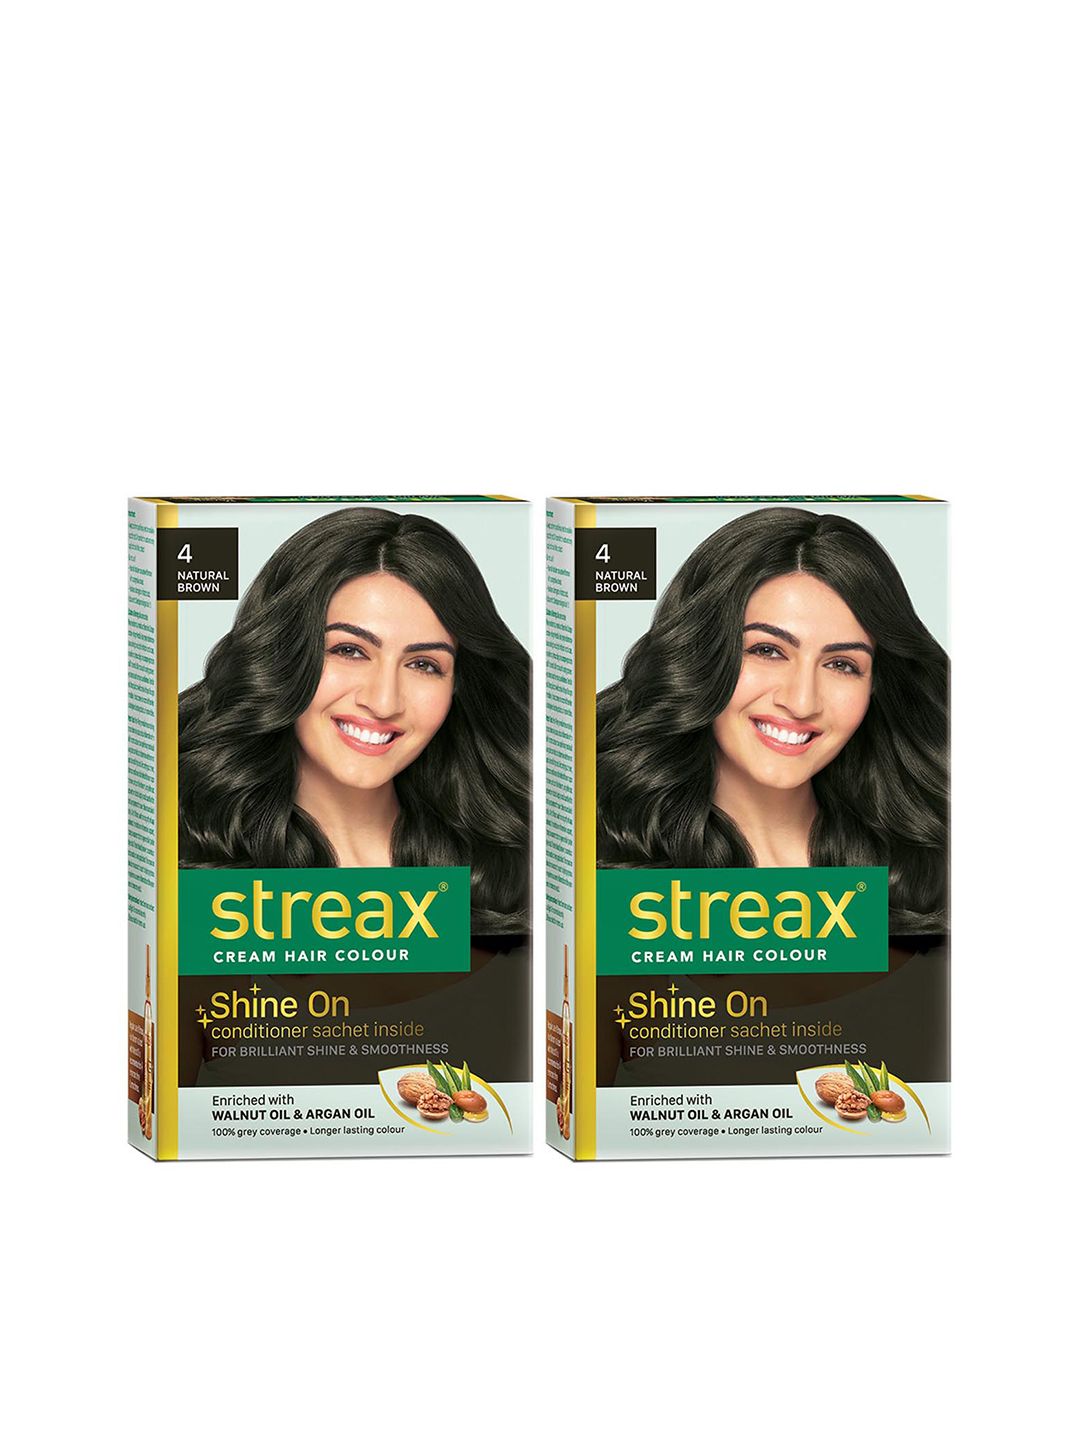 Streax Set of 2 Cream Hair Colours - 4 Natural Brown 120 ml Each Price in India